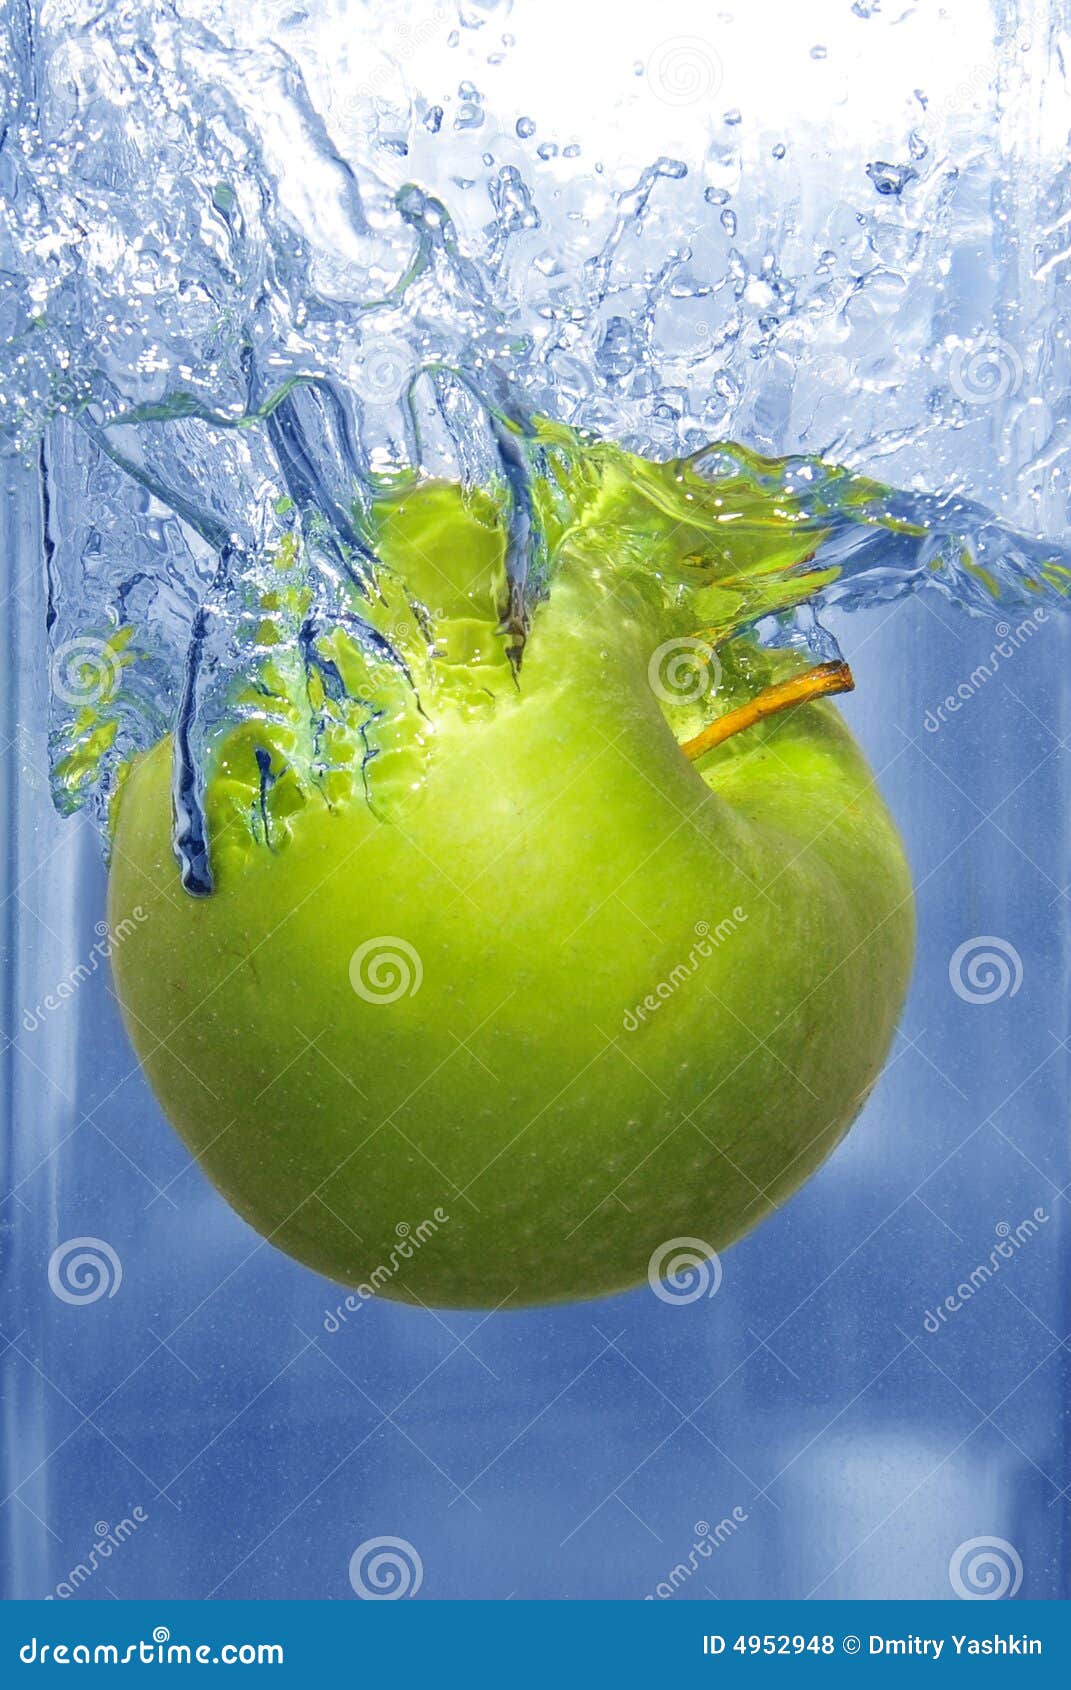 https://thumbs.dreamstime.com/z/splashing-apple-water-4952948.jpg